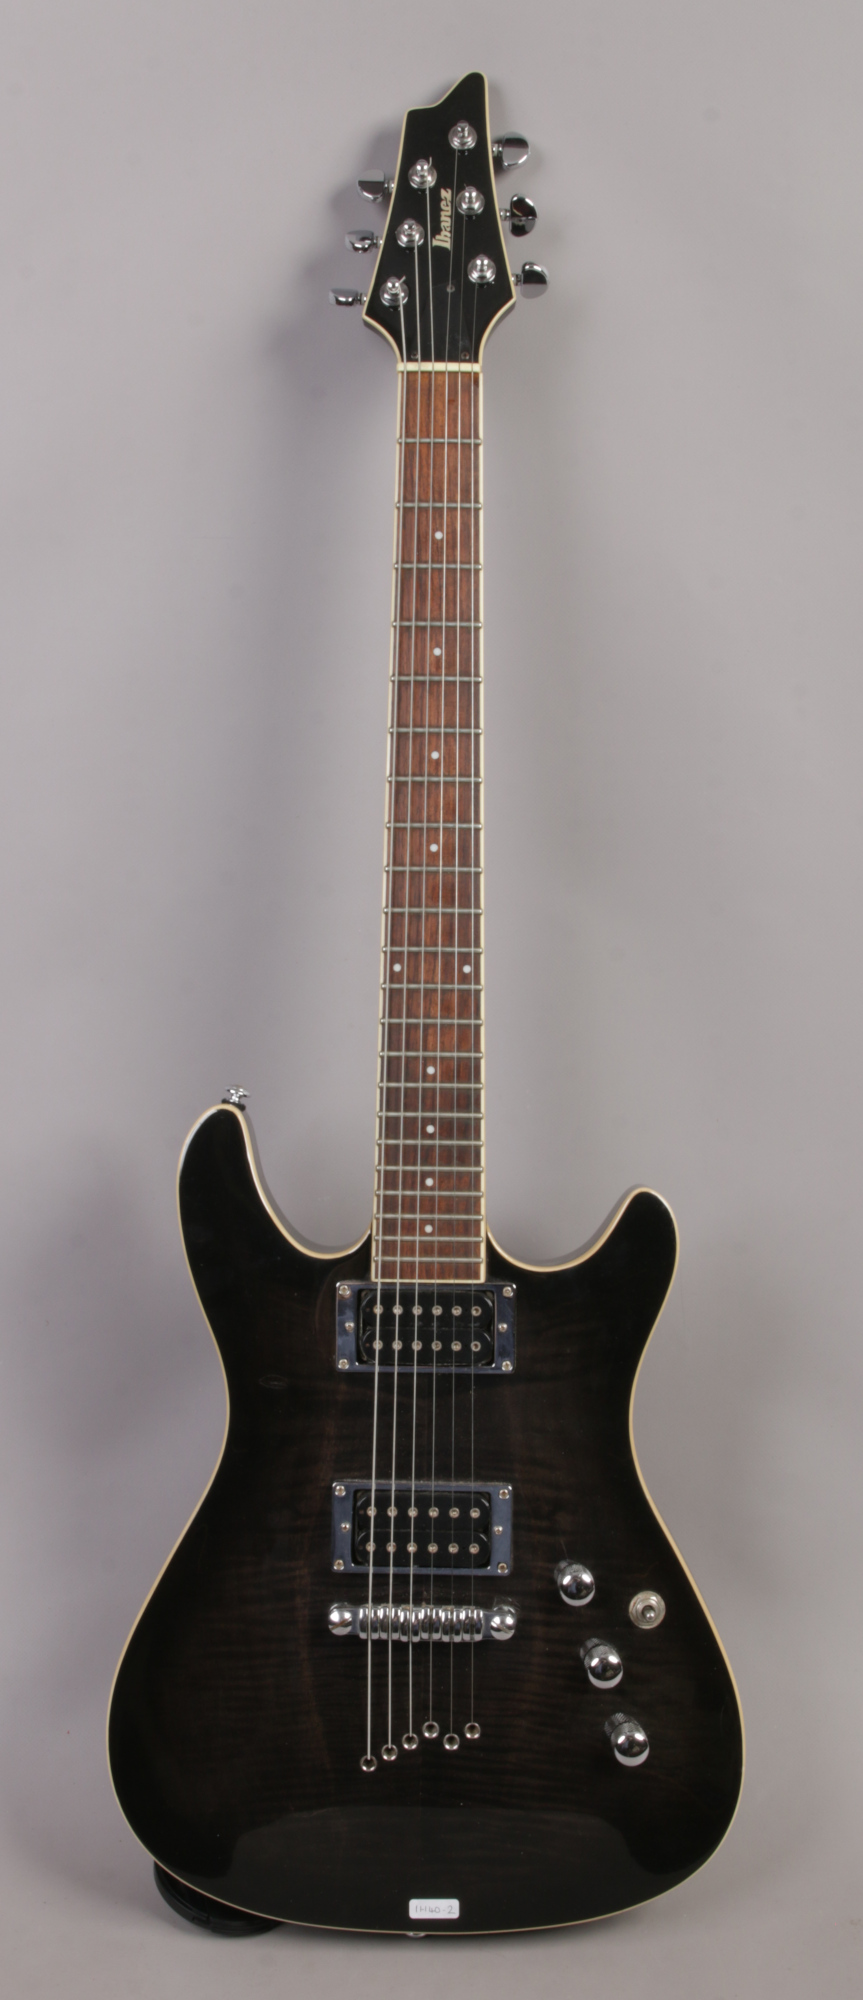 An Ibanez N427 6 string electric guitar.